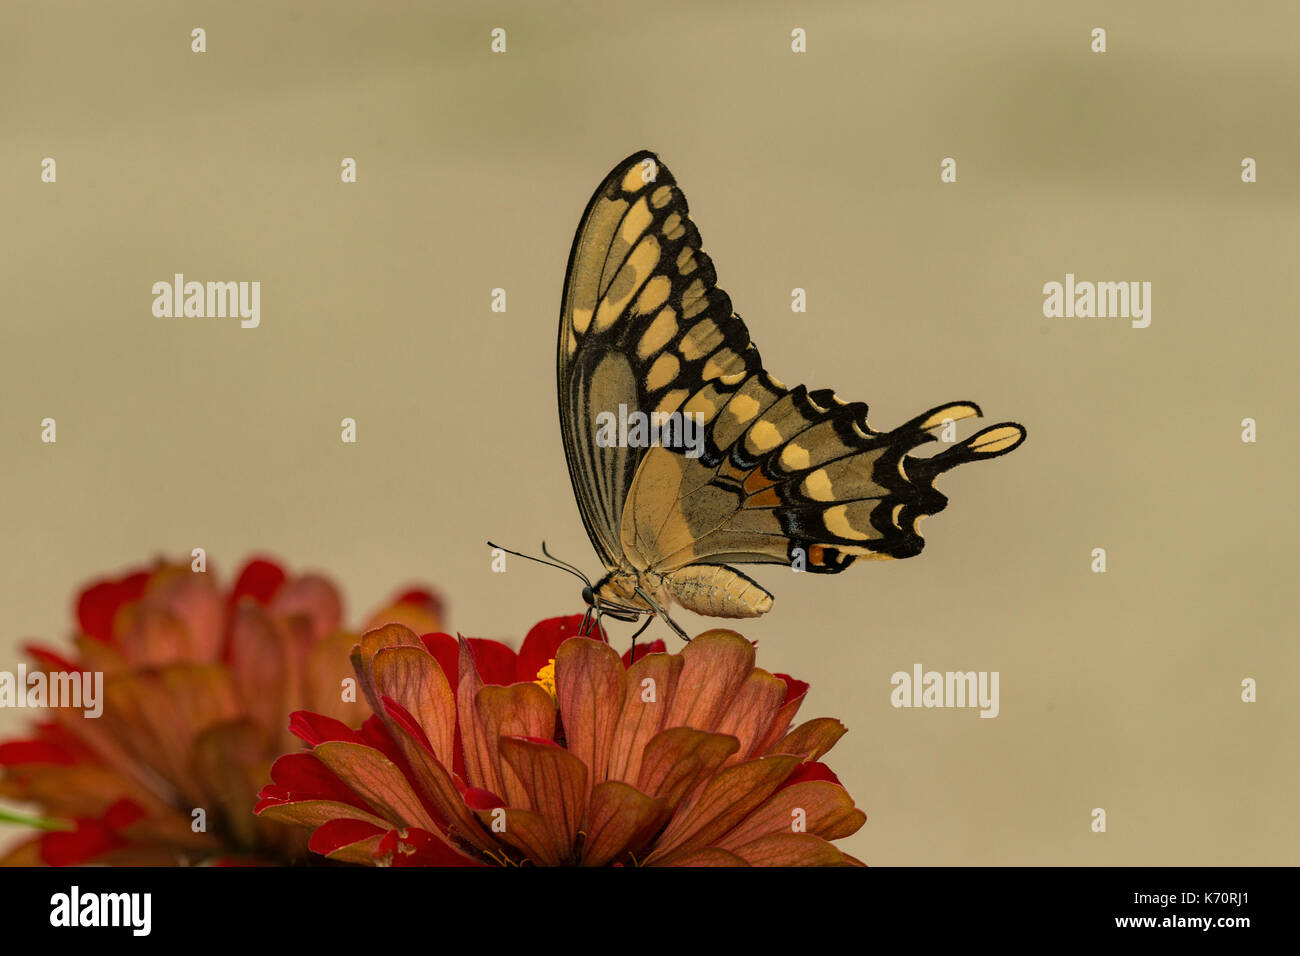 Giant Swallowtail butterfly on Zinnia flower. Stock Photo